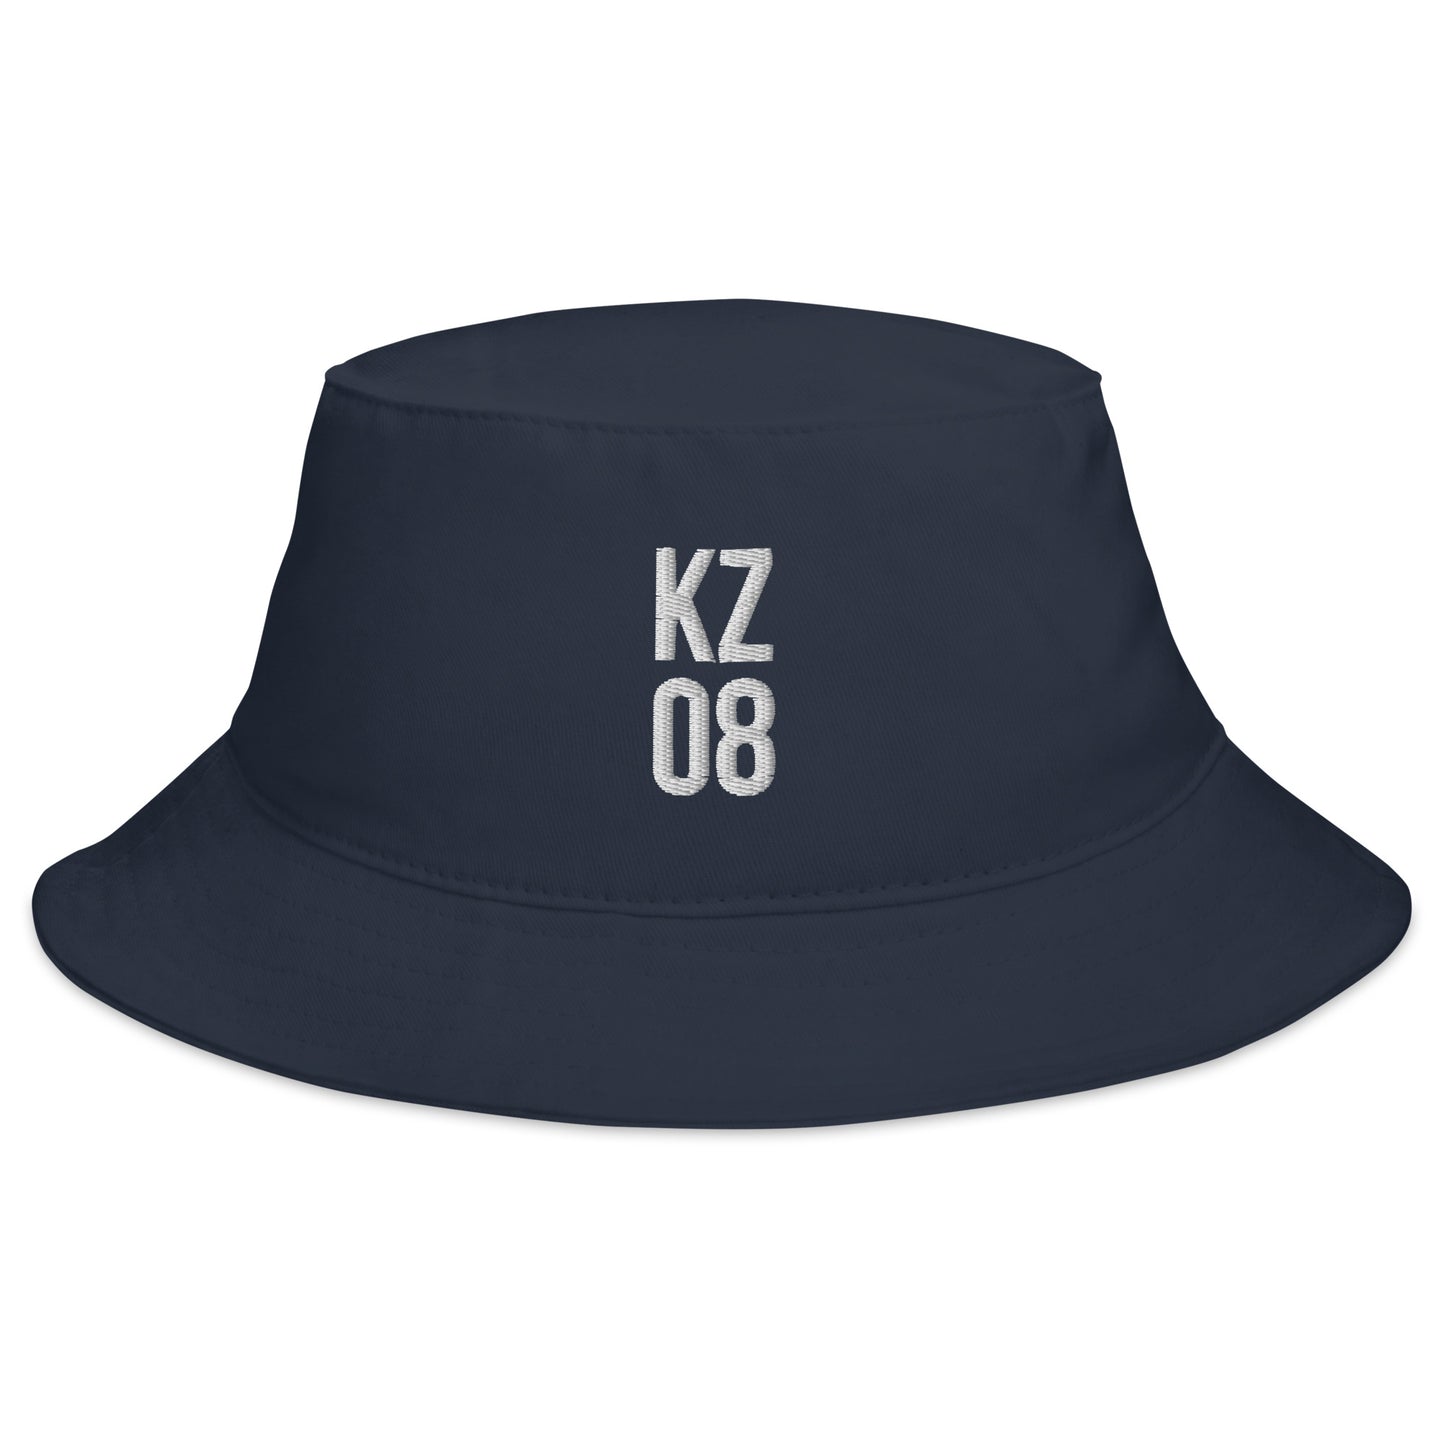 KZ 08 Bucket Hat